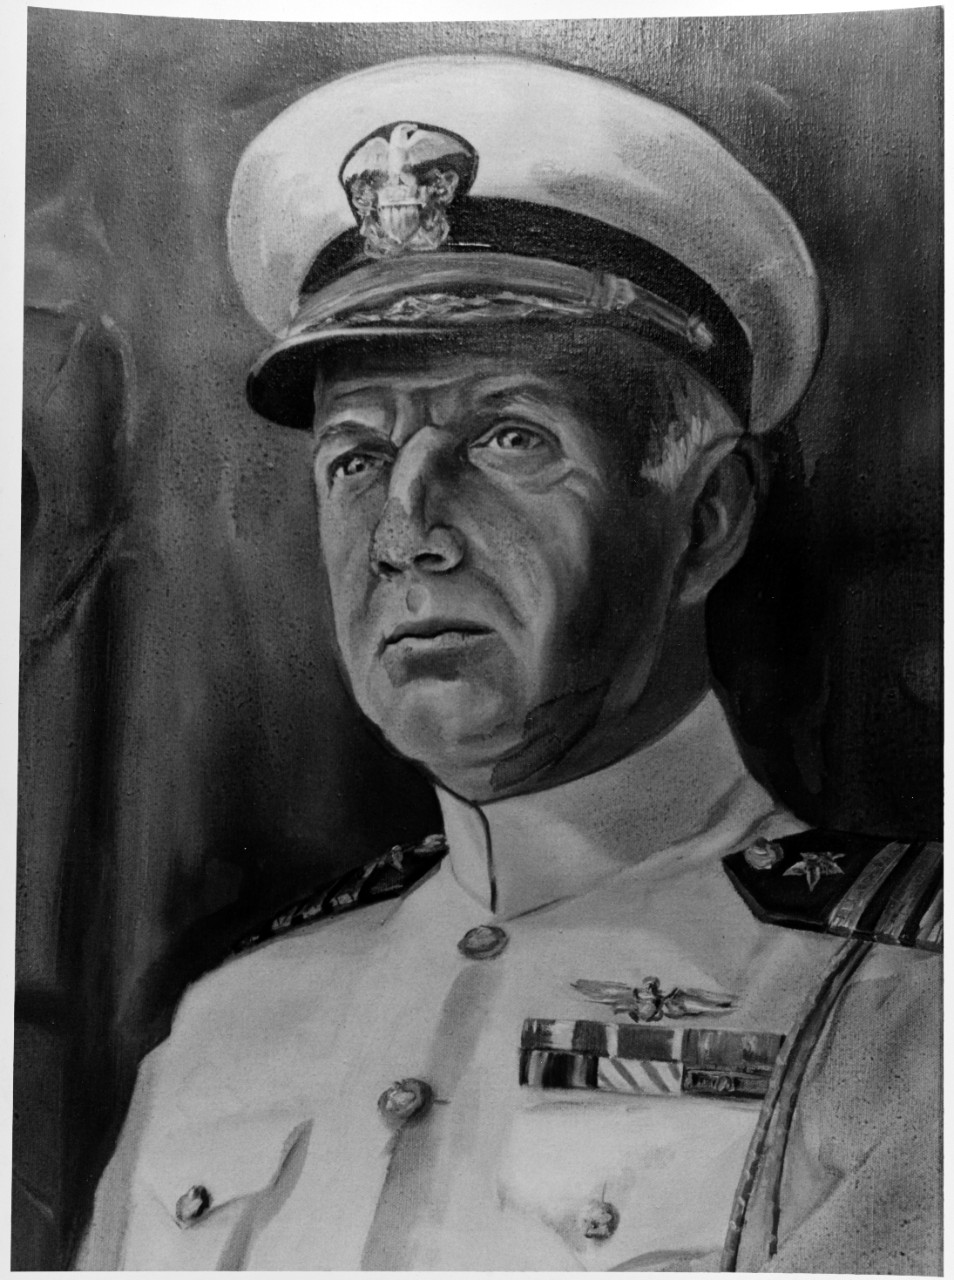 Captain John H. Towers